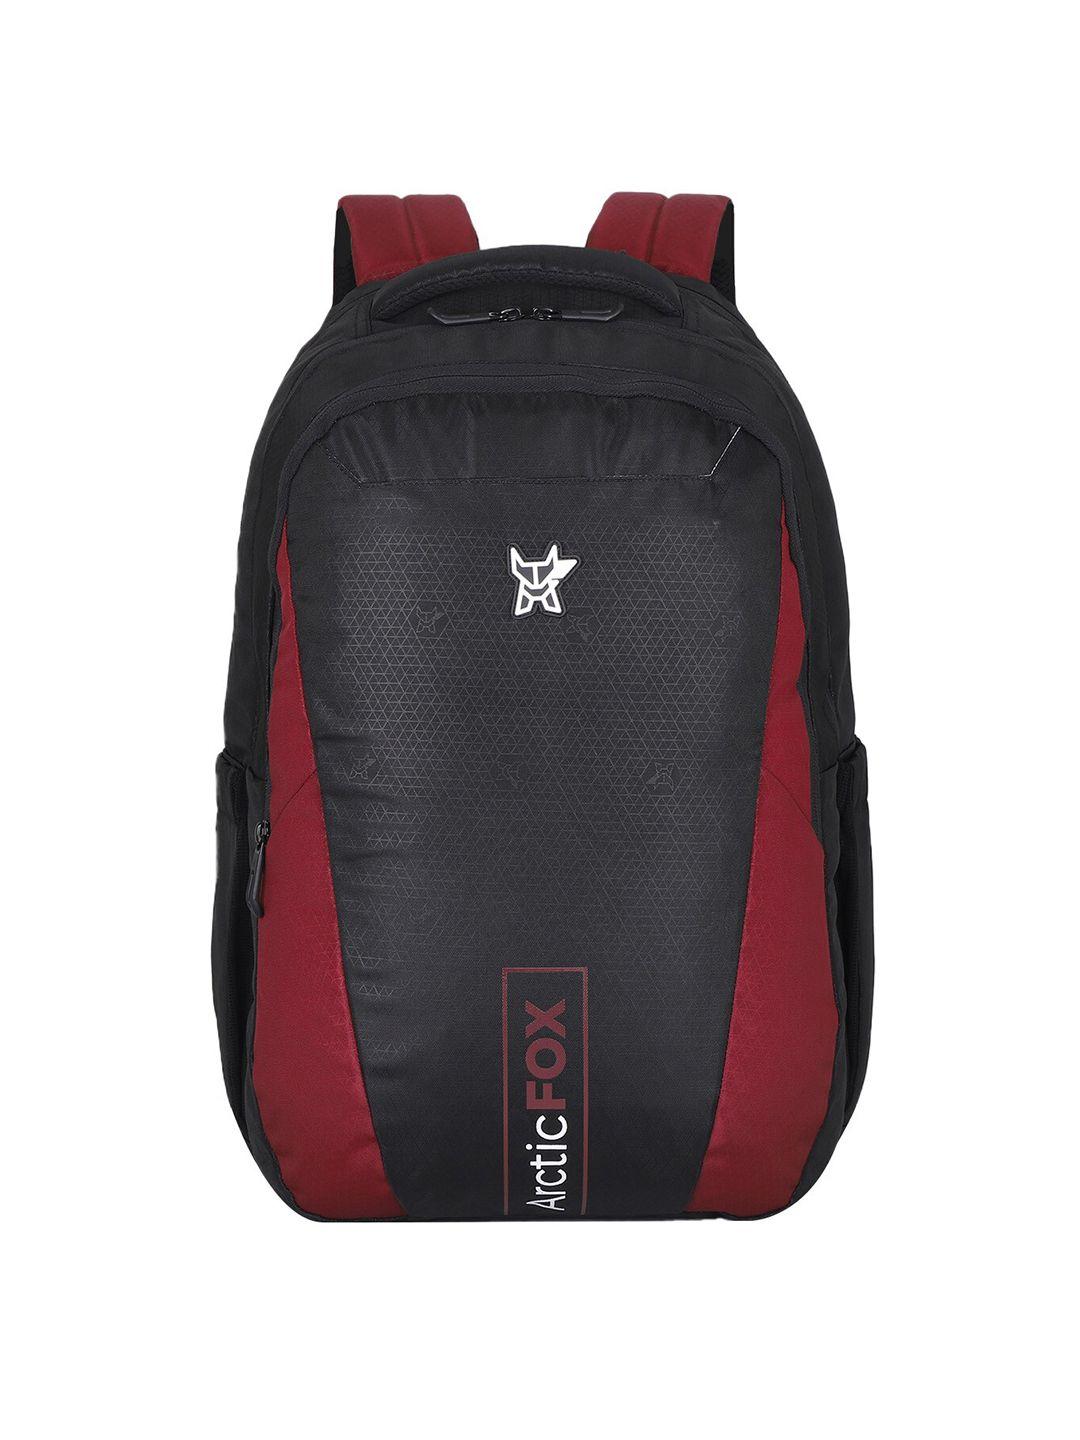 arctic fox unisex maroon & black colourblocked laptop bag